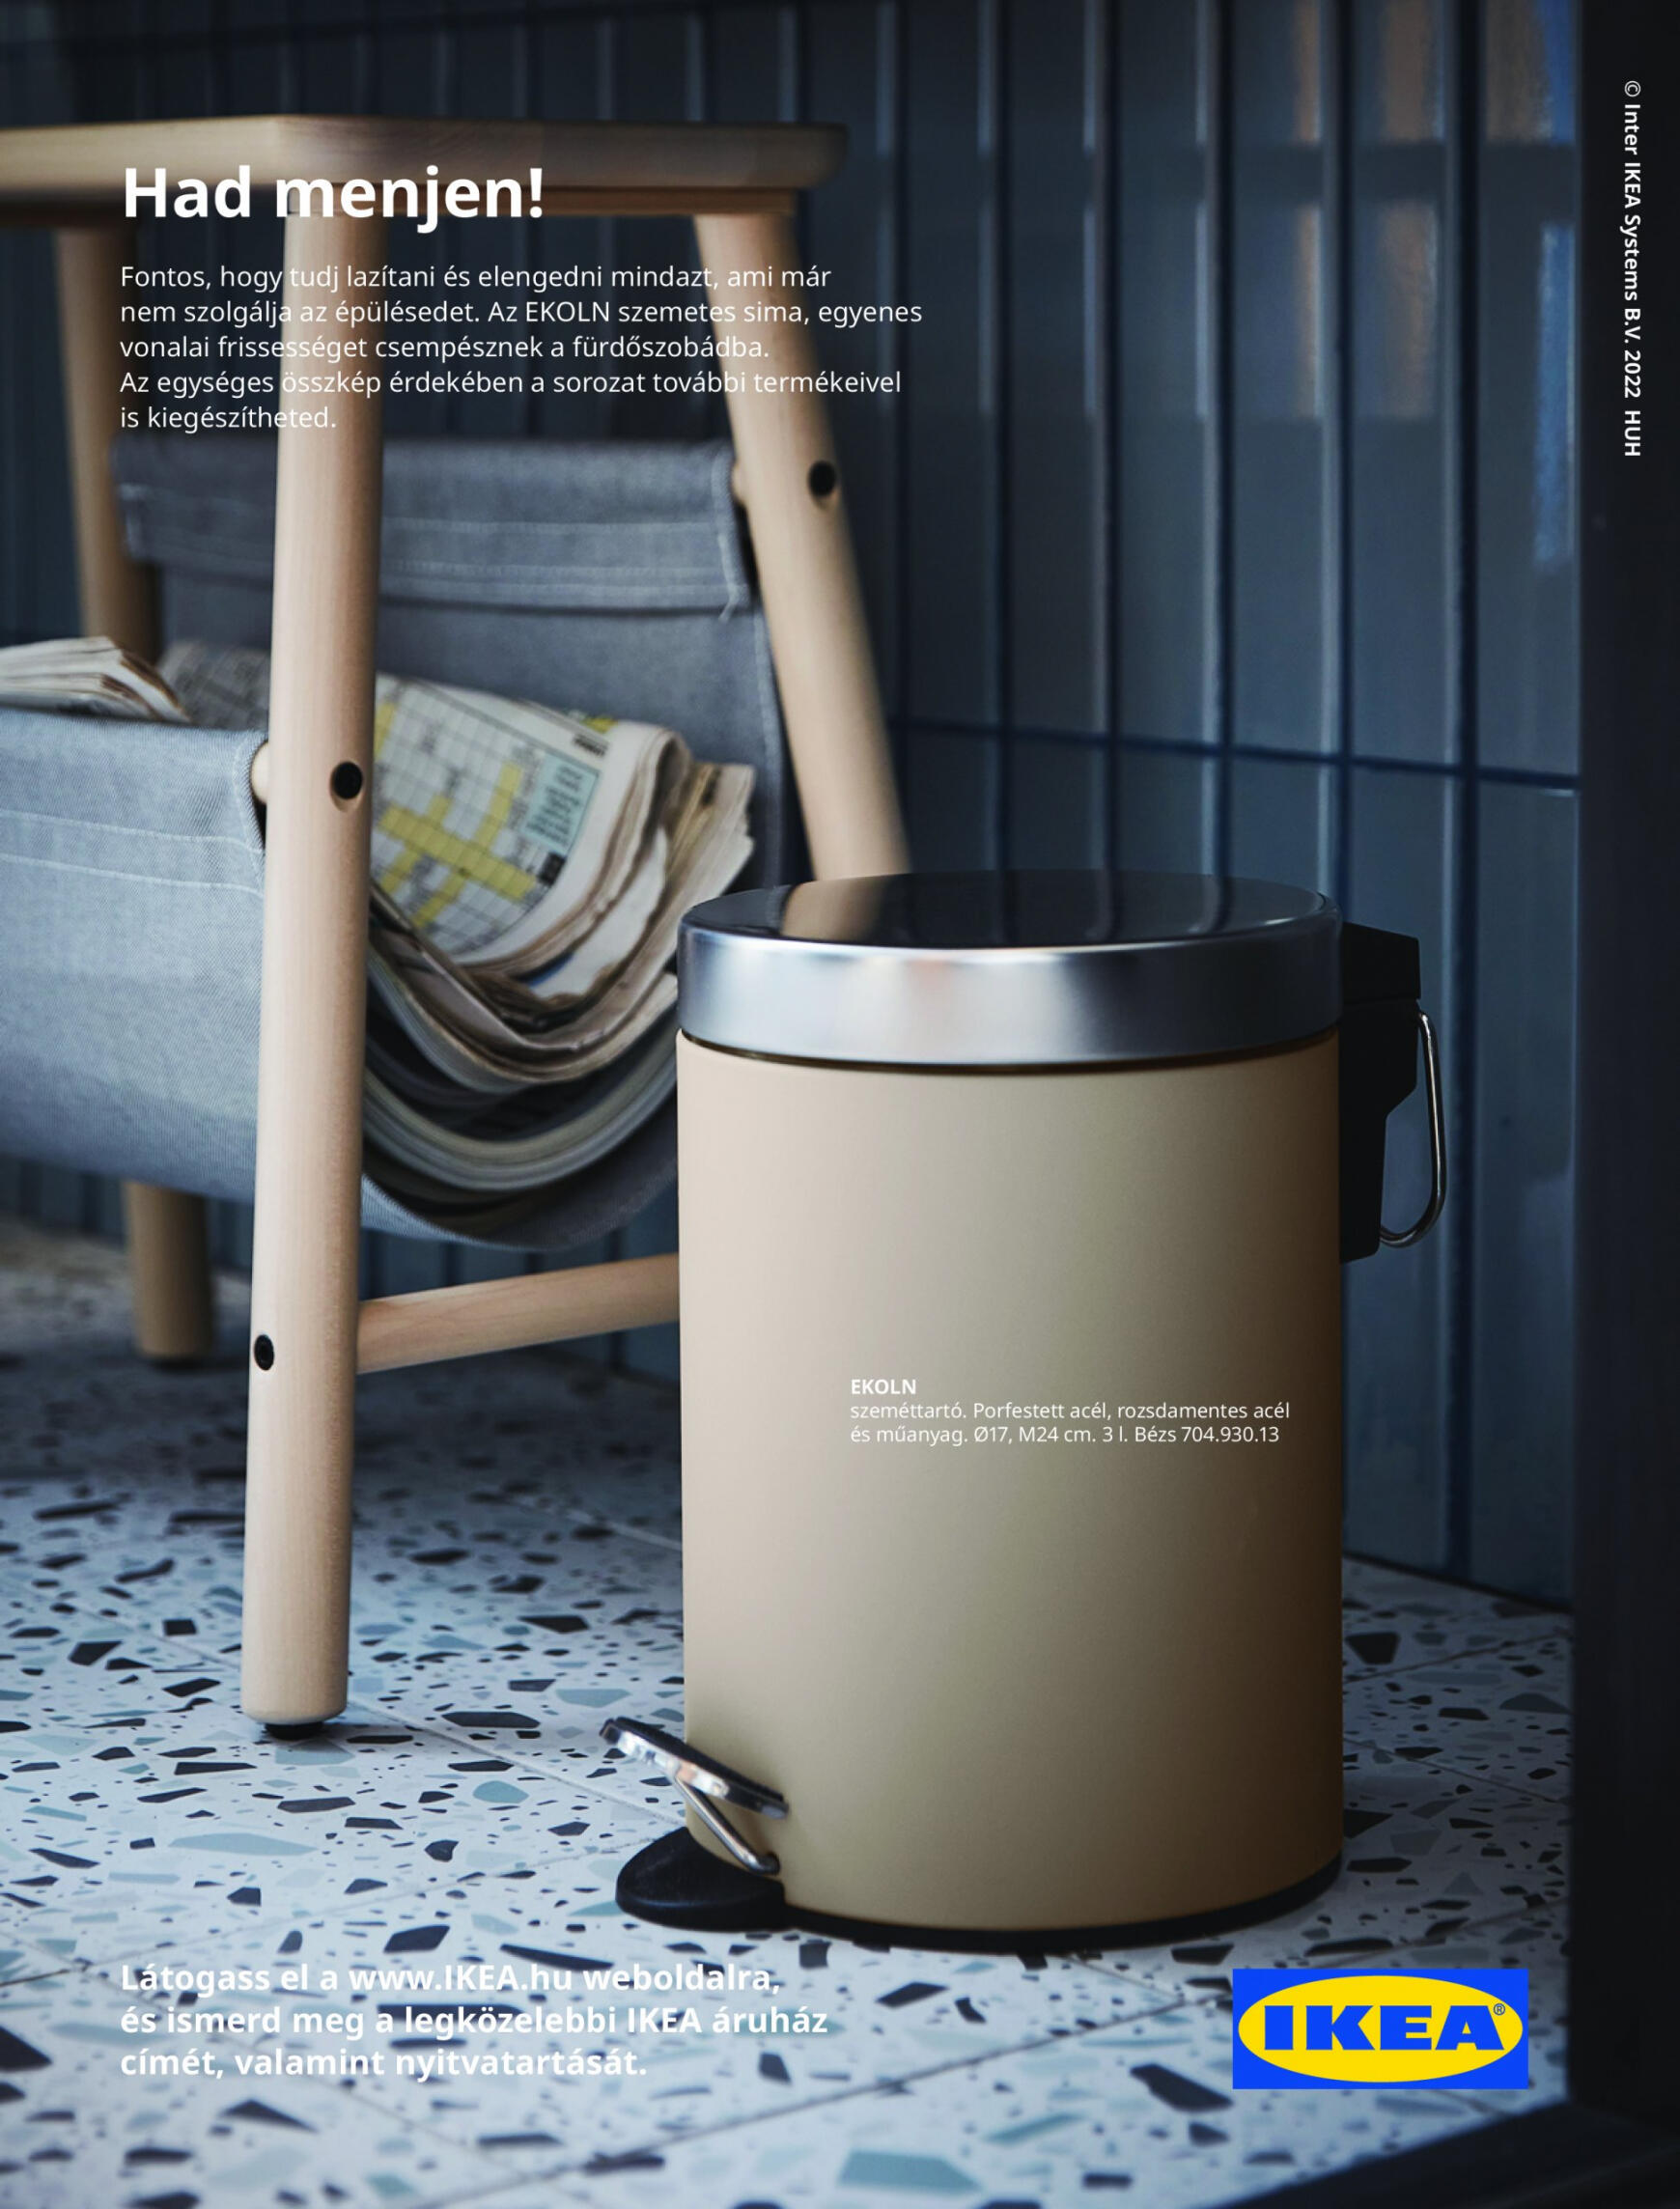 ikea - IKEA újság hétfőtől 09.26. - page: 36